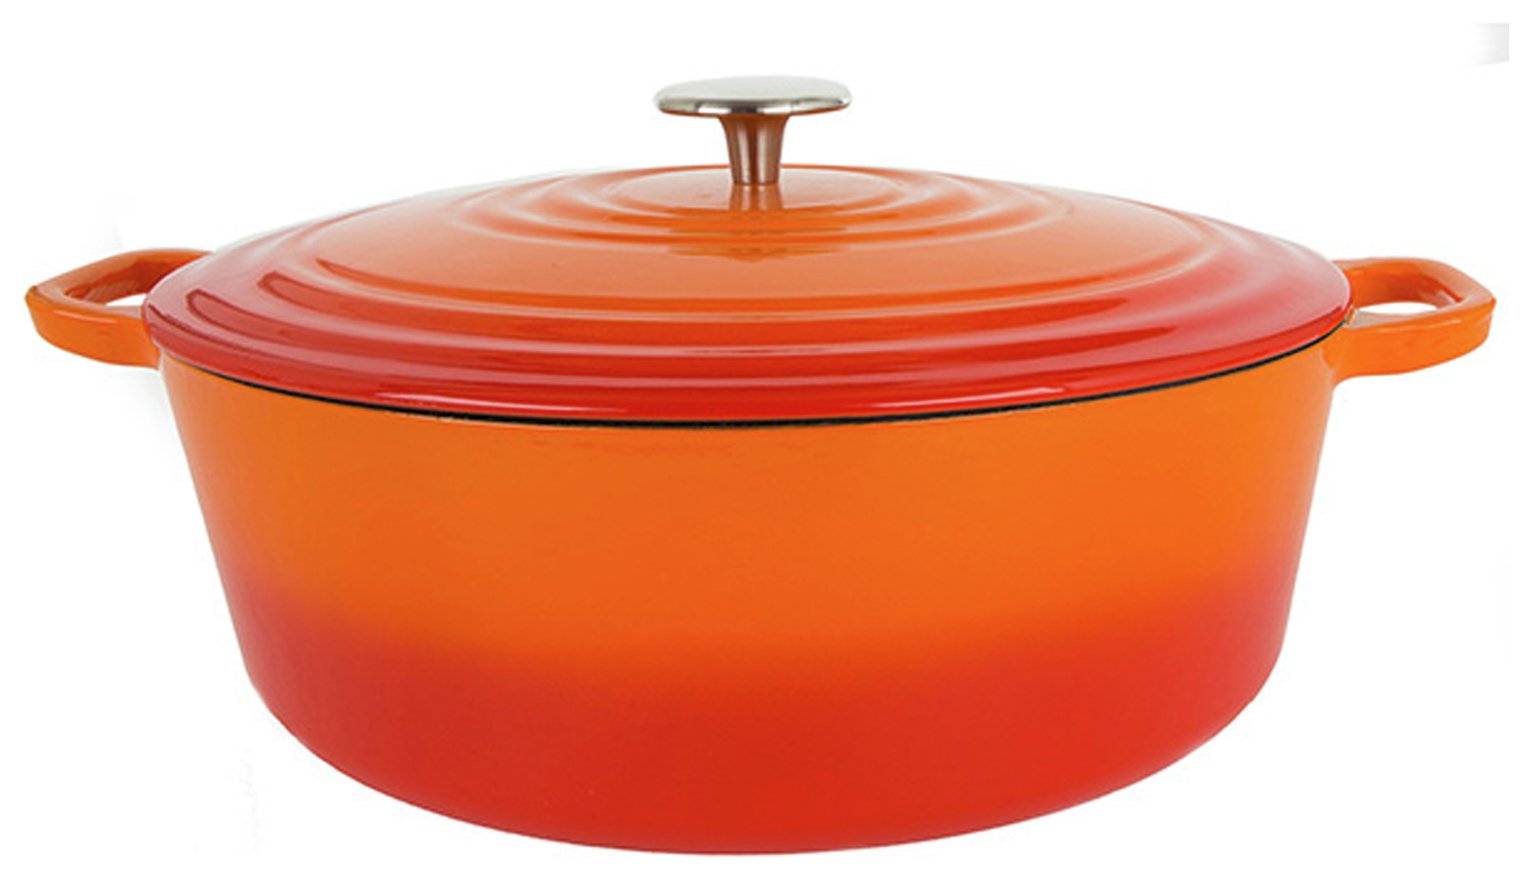 Sainsbury's Home 2.4 Litre Cast Iron Casserole Dish - Orange